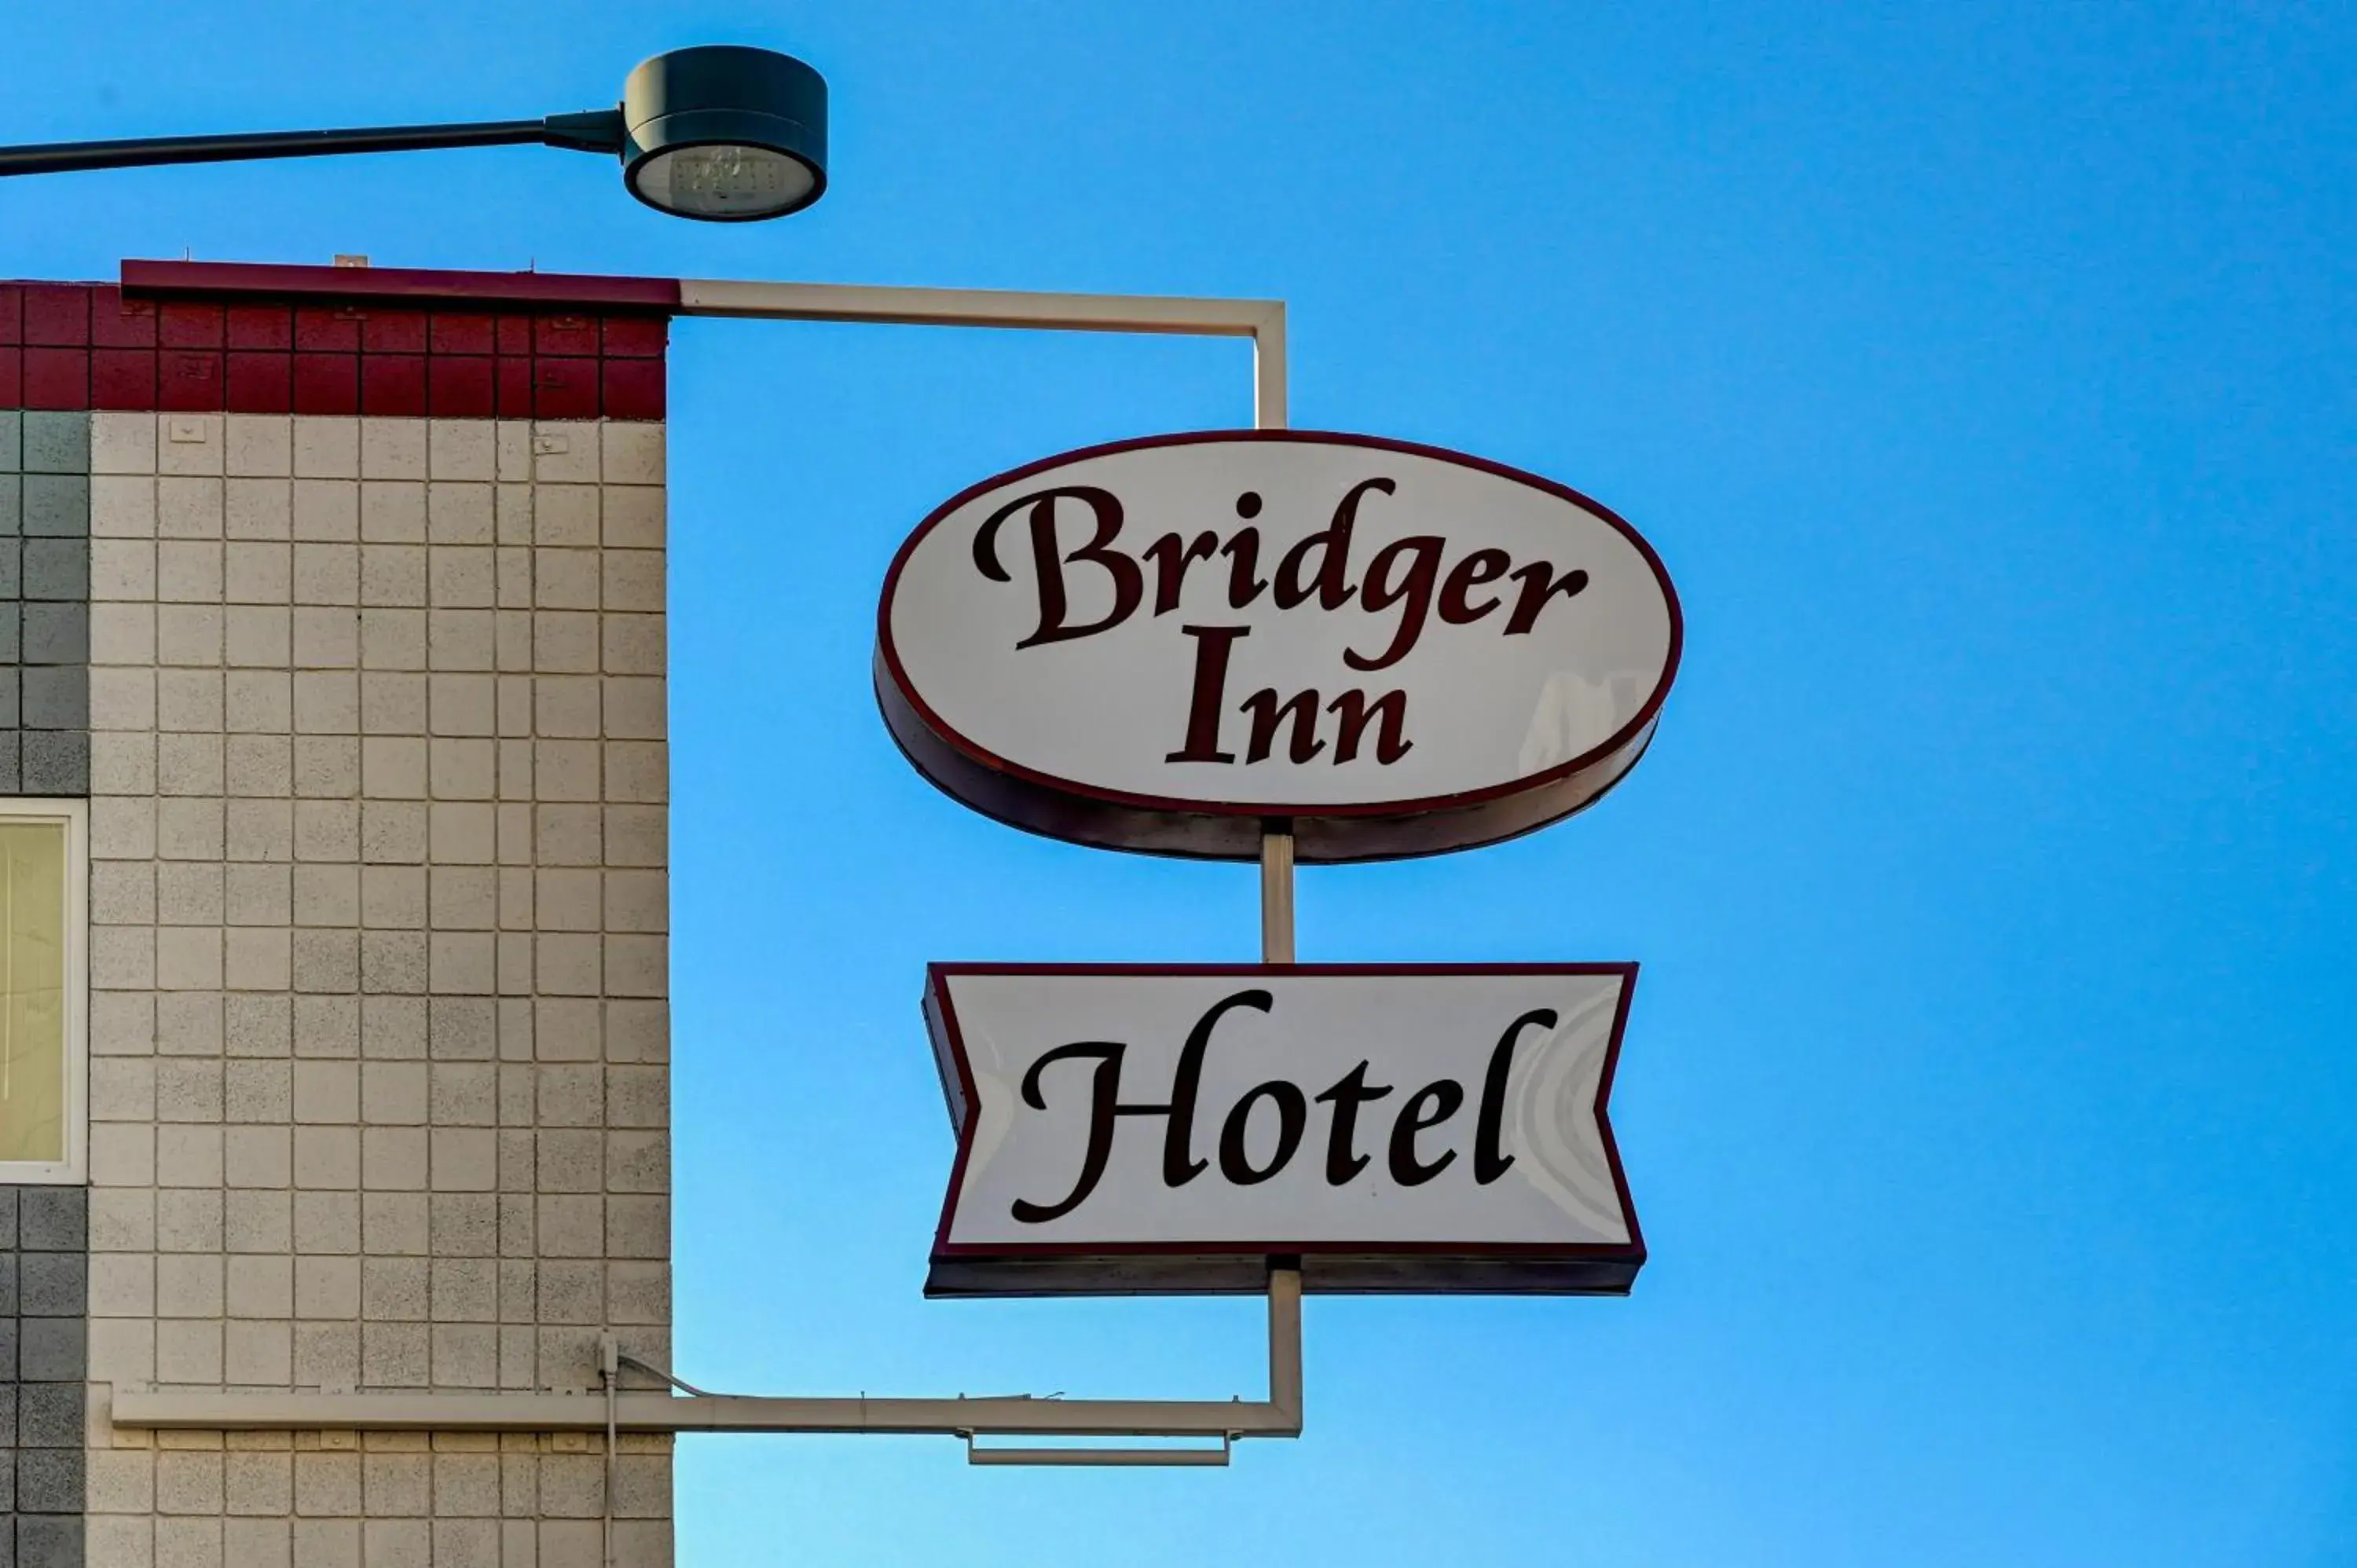 Property logo or sign in Bridger Inn Hotel Downtown